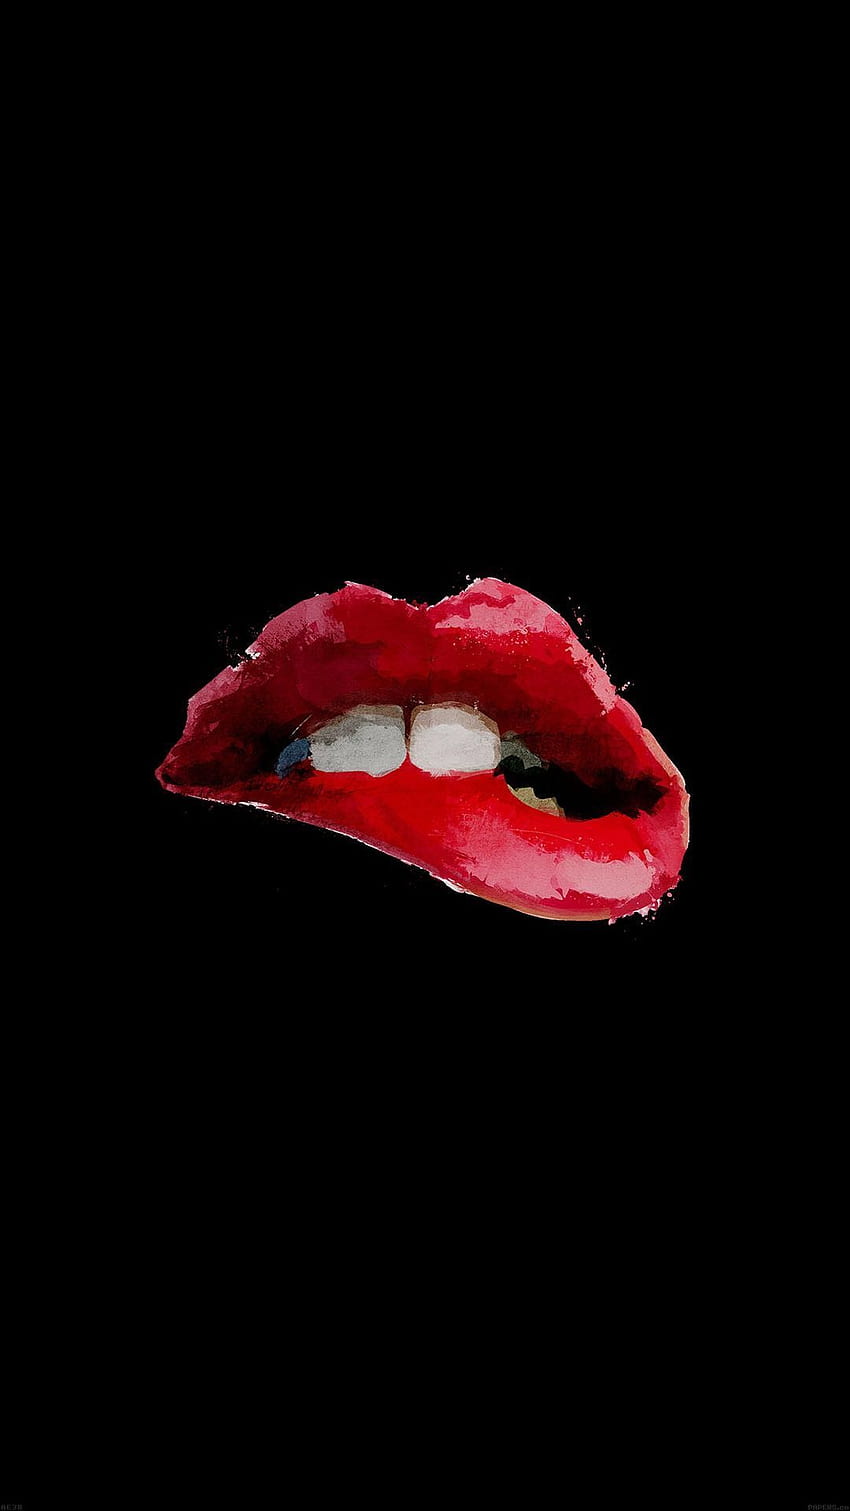 Lipstick Wallpaper Images  Free Download on Freepik